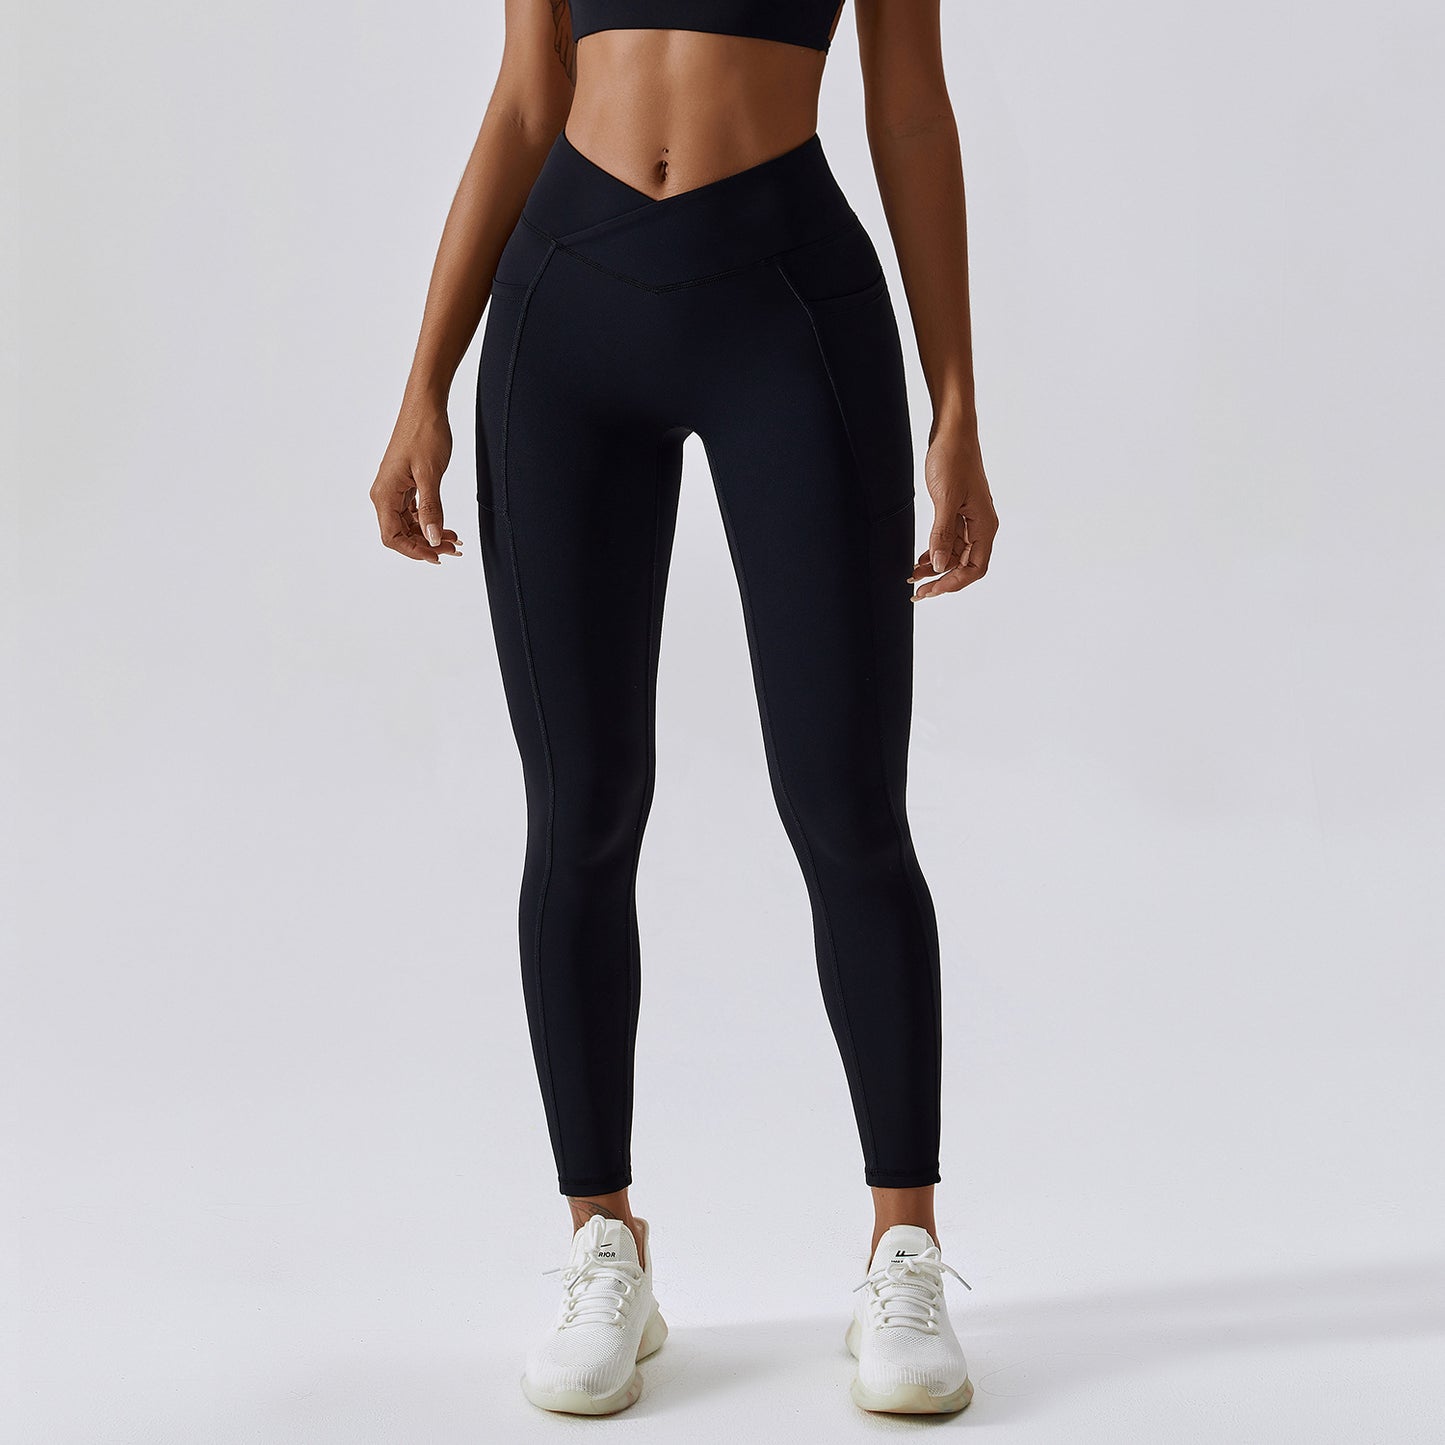 Quick Drying Fitness Pants Criss Cross Waist Head Skinny Running Sports Pants Women